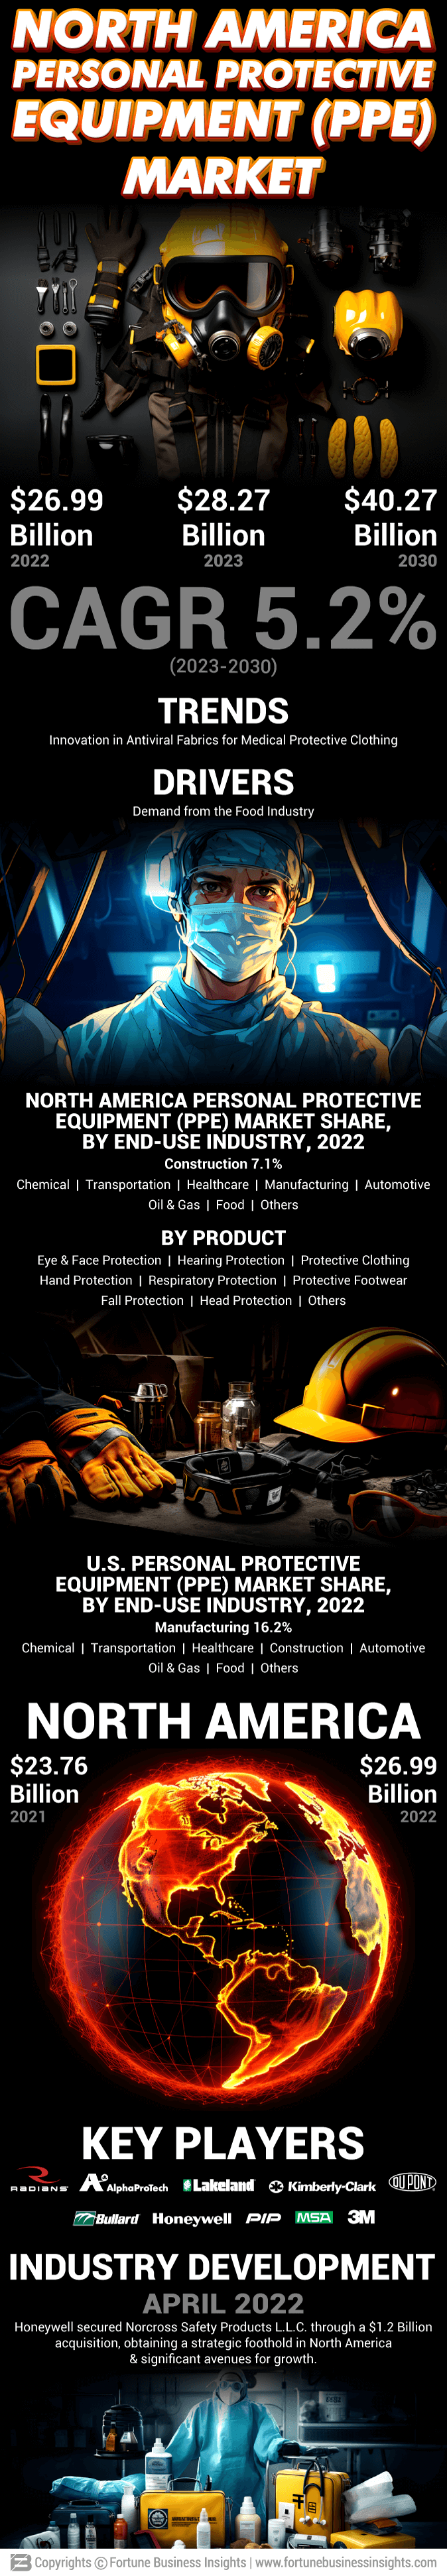 North America Personal Protective Equipment Market